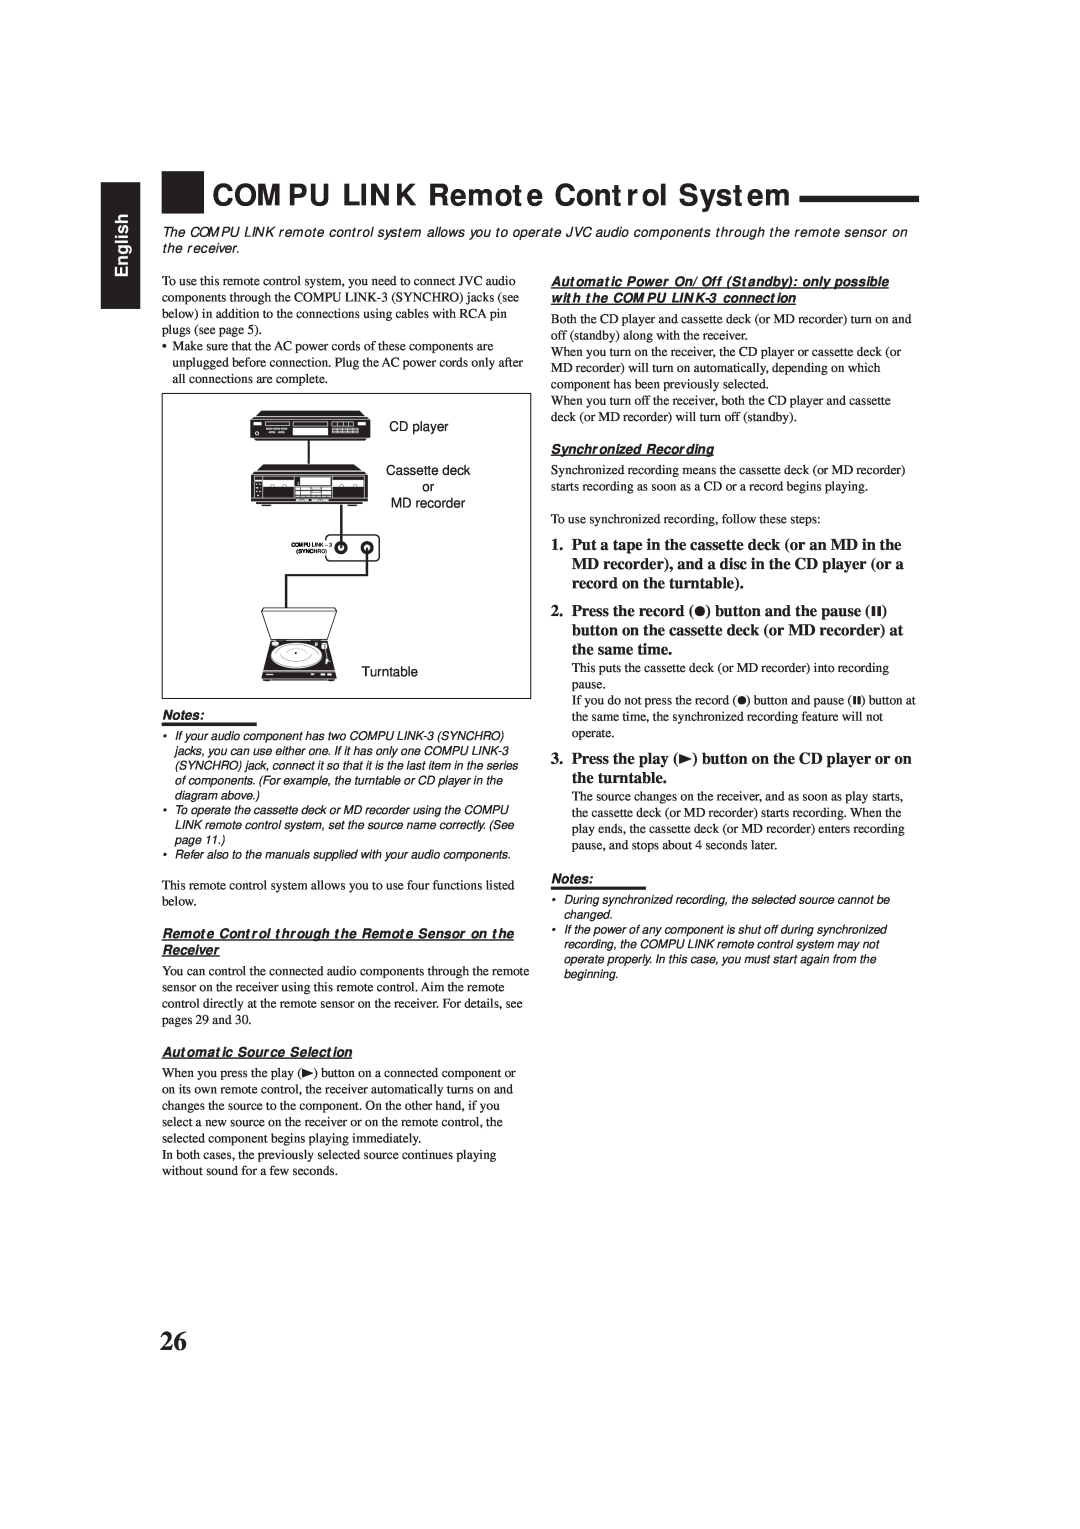 JVC RX-6100VBK manual COMPU LINK Remote Control System, English 